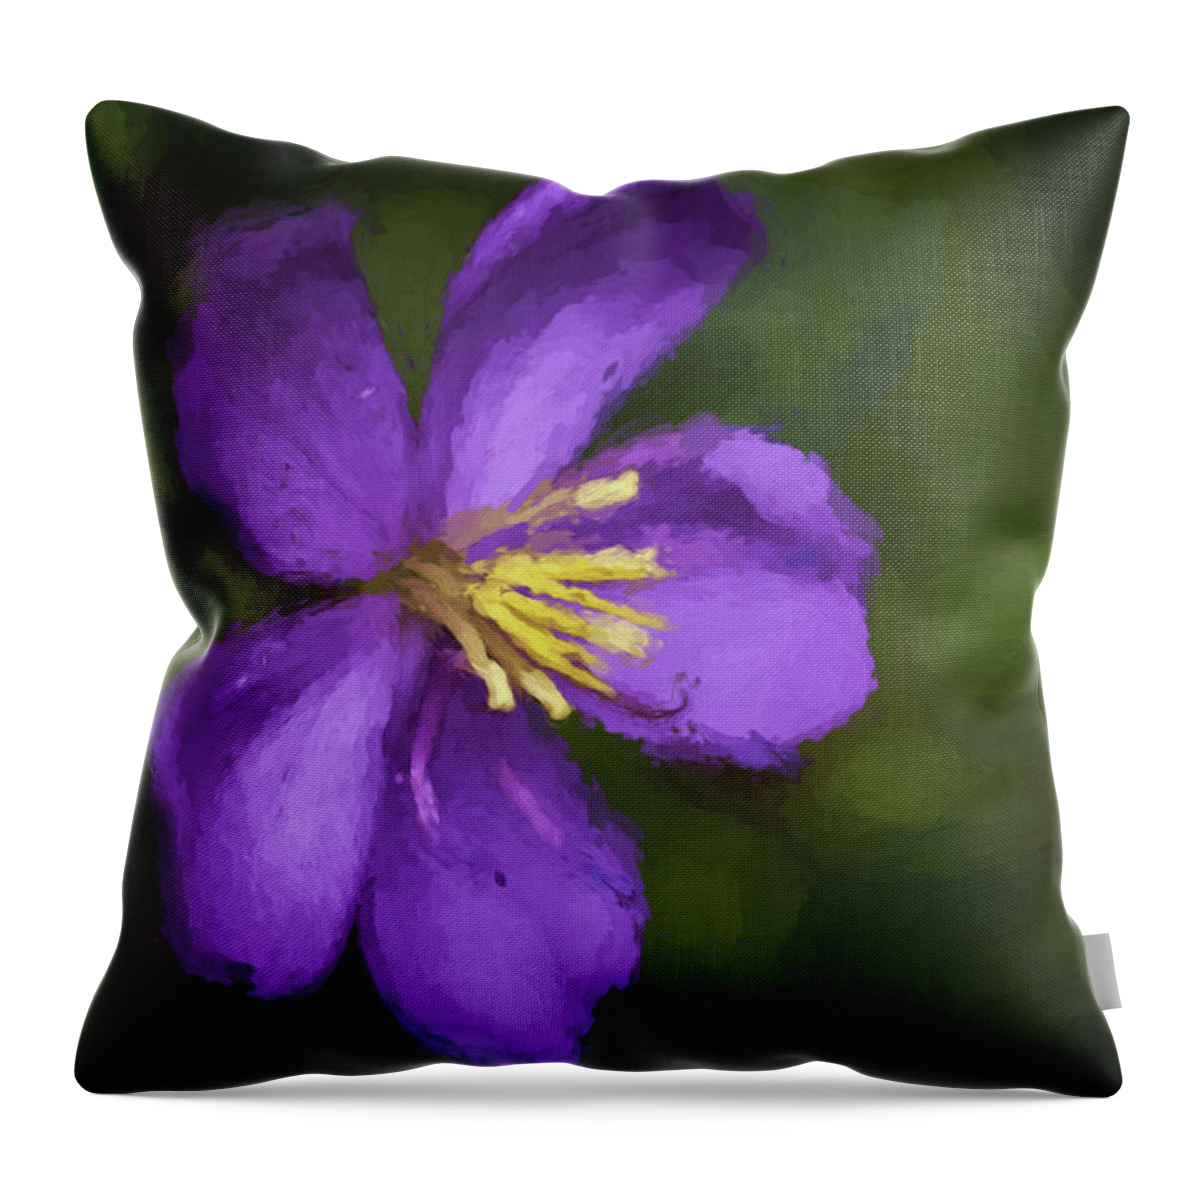 Hawaii Throw Pillow featuring the photograph Purple Flower Macro Impression by Dan McManus